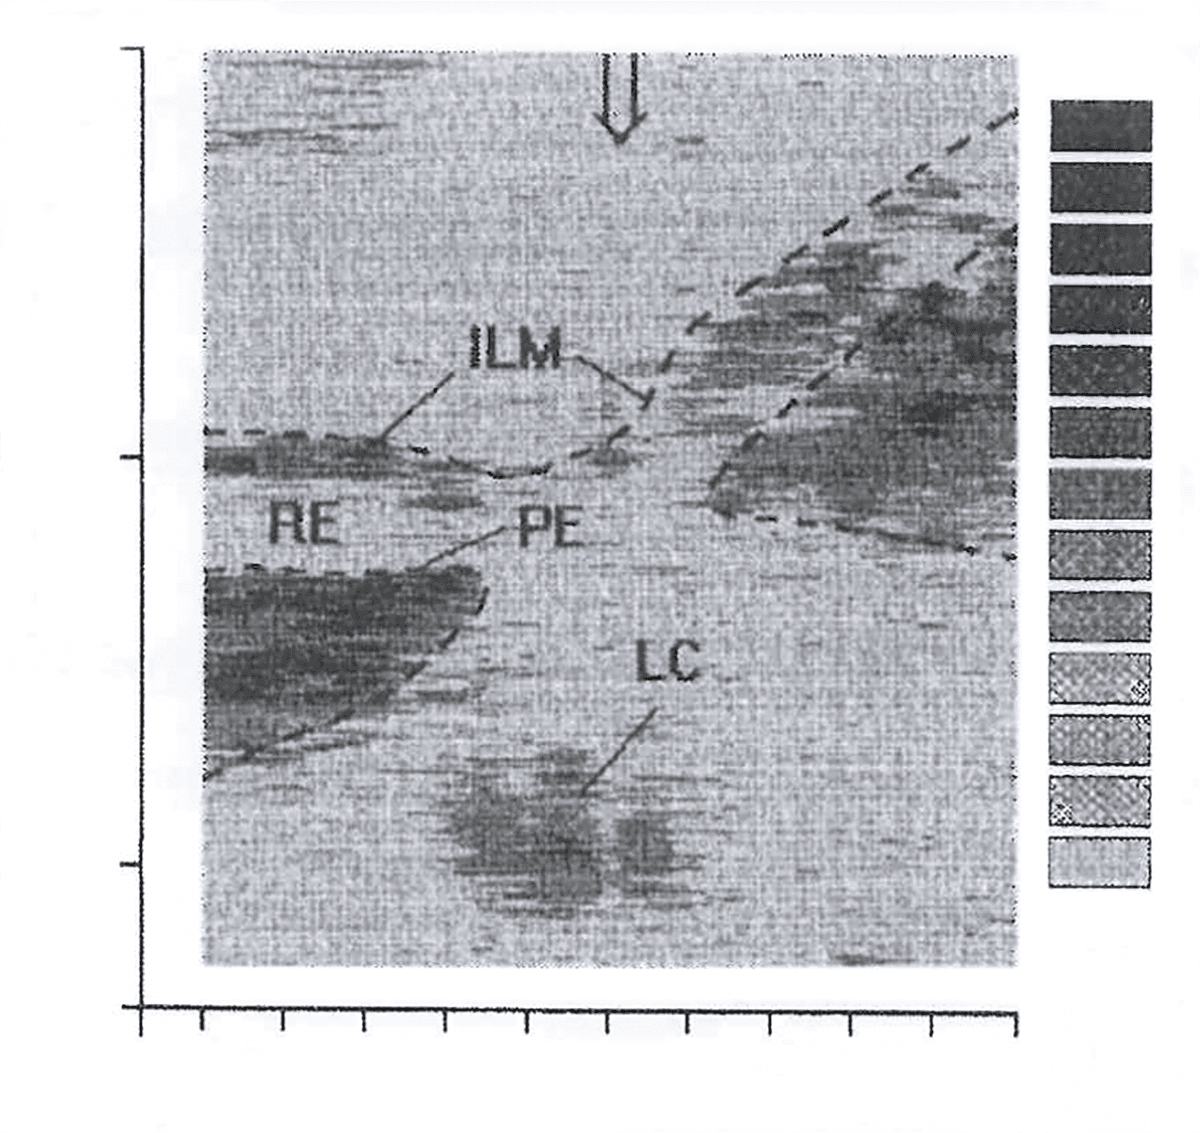 In vivo retinal image recorded by Fercher’s group.1,2 ILM, inner limiting membrane; LC, lamina cribrosa; PE, pigment epithelium; RE, retina.